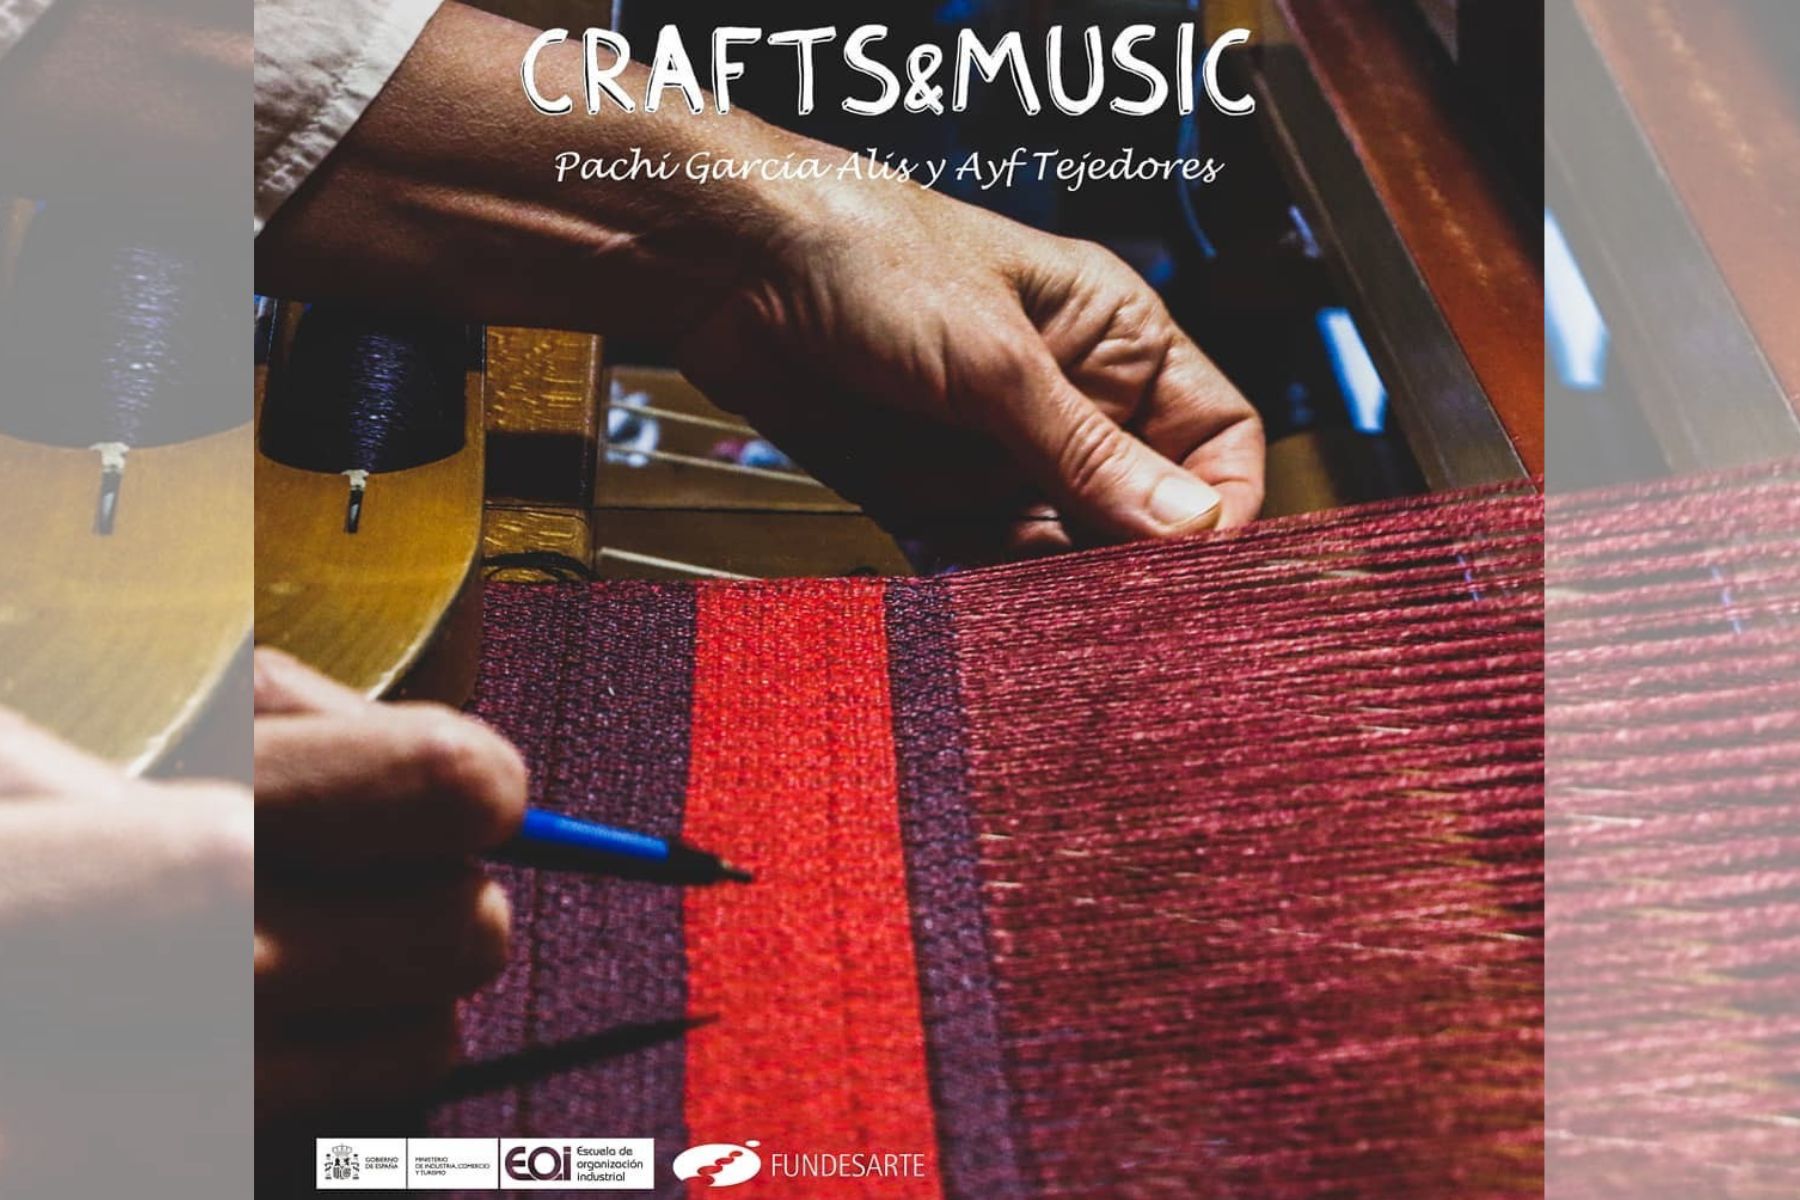 Crafts & Music